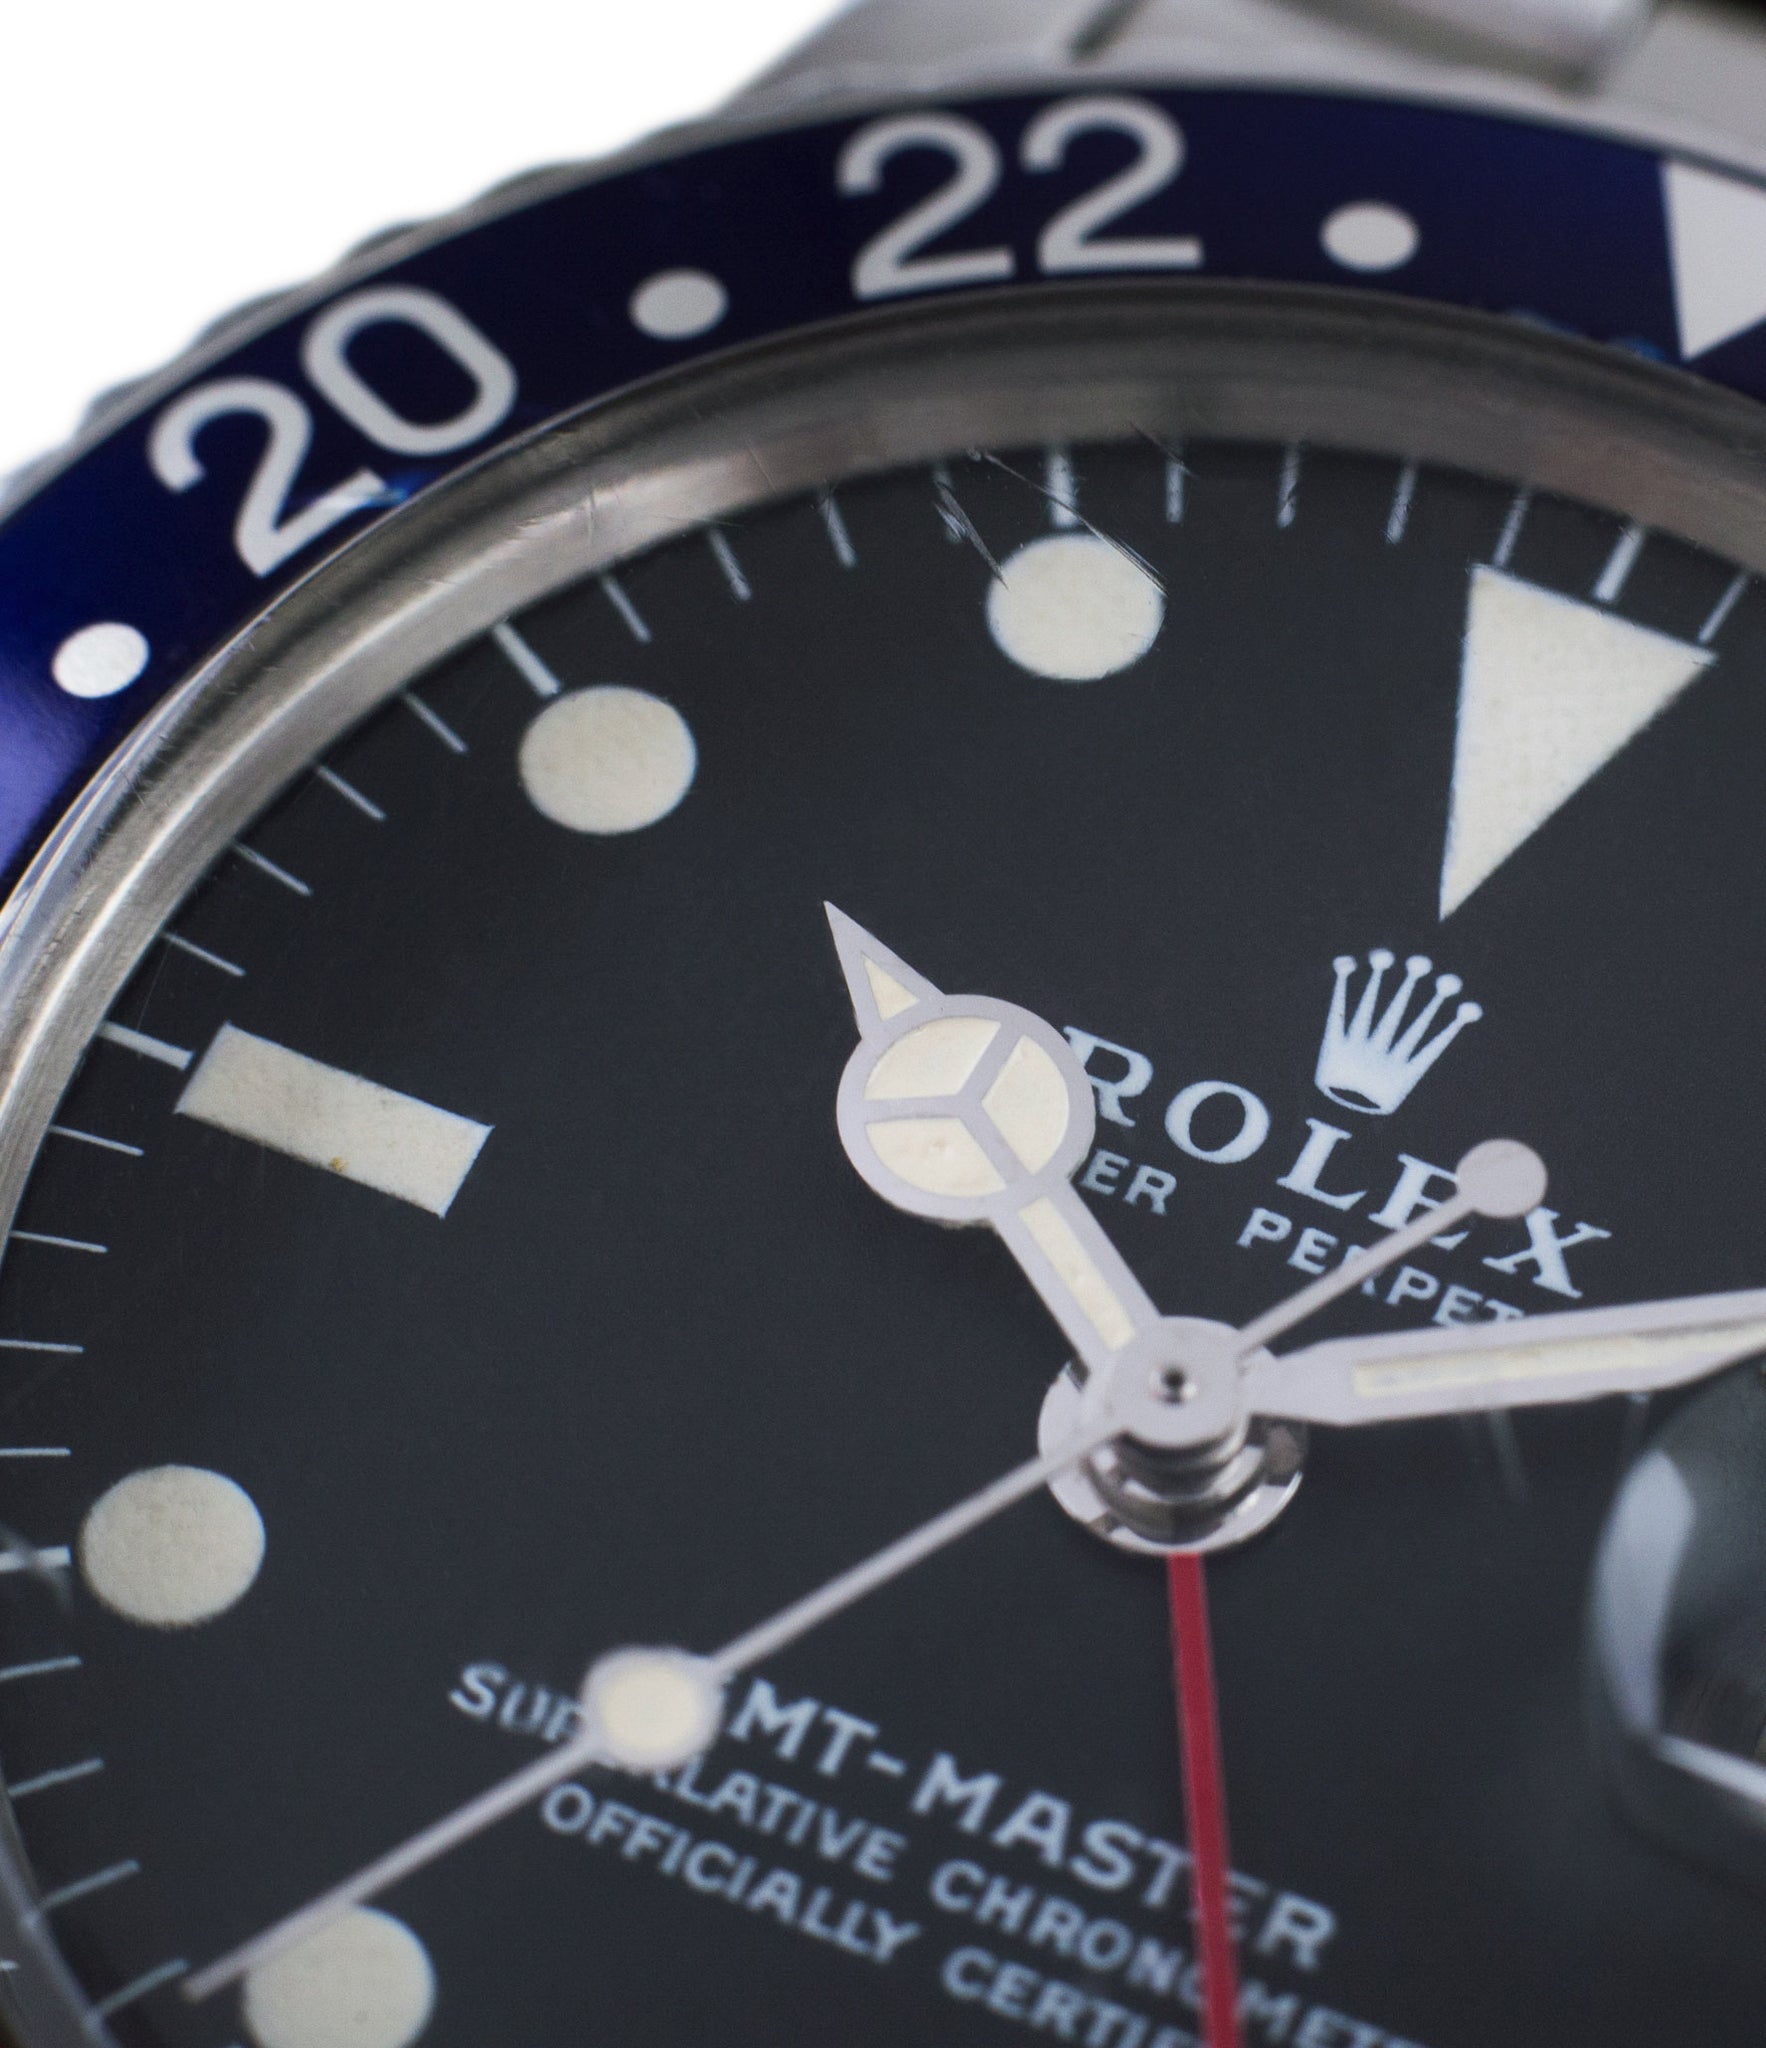 GMT Rolex 1675 vintage steel traveller sport watch Pepsi bezel for sale online at A Collected Man London vintage watch specialist